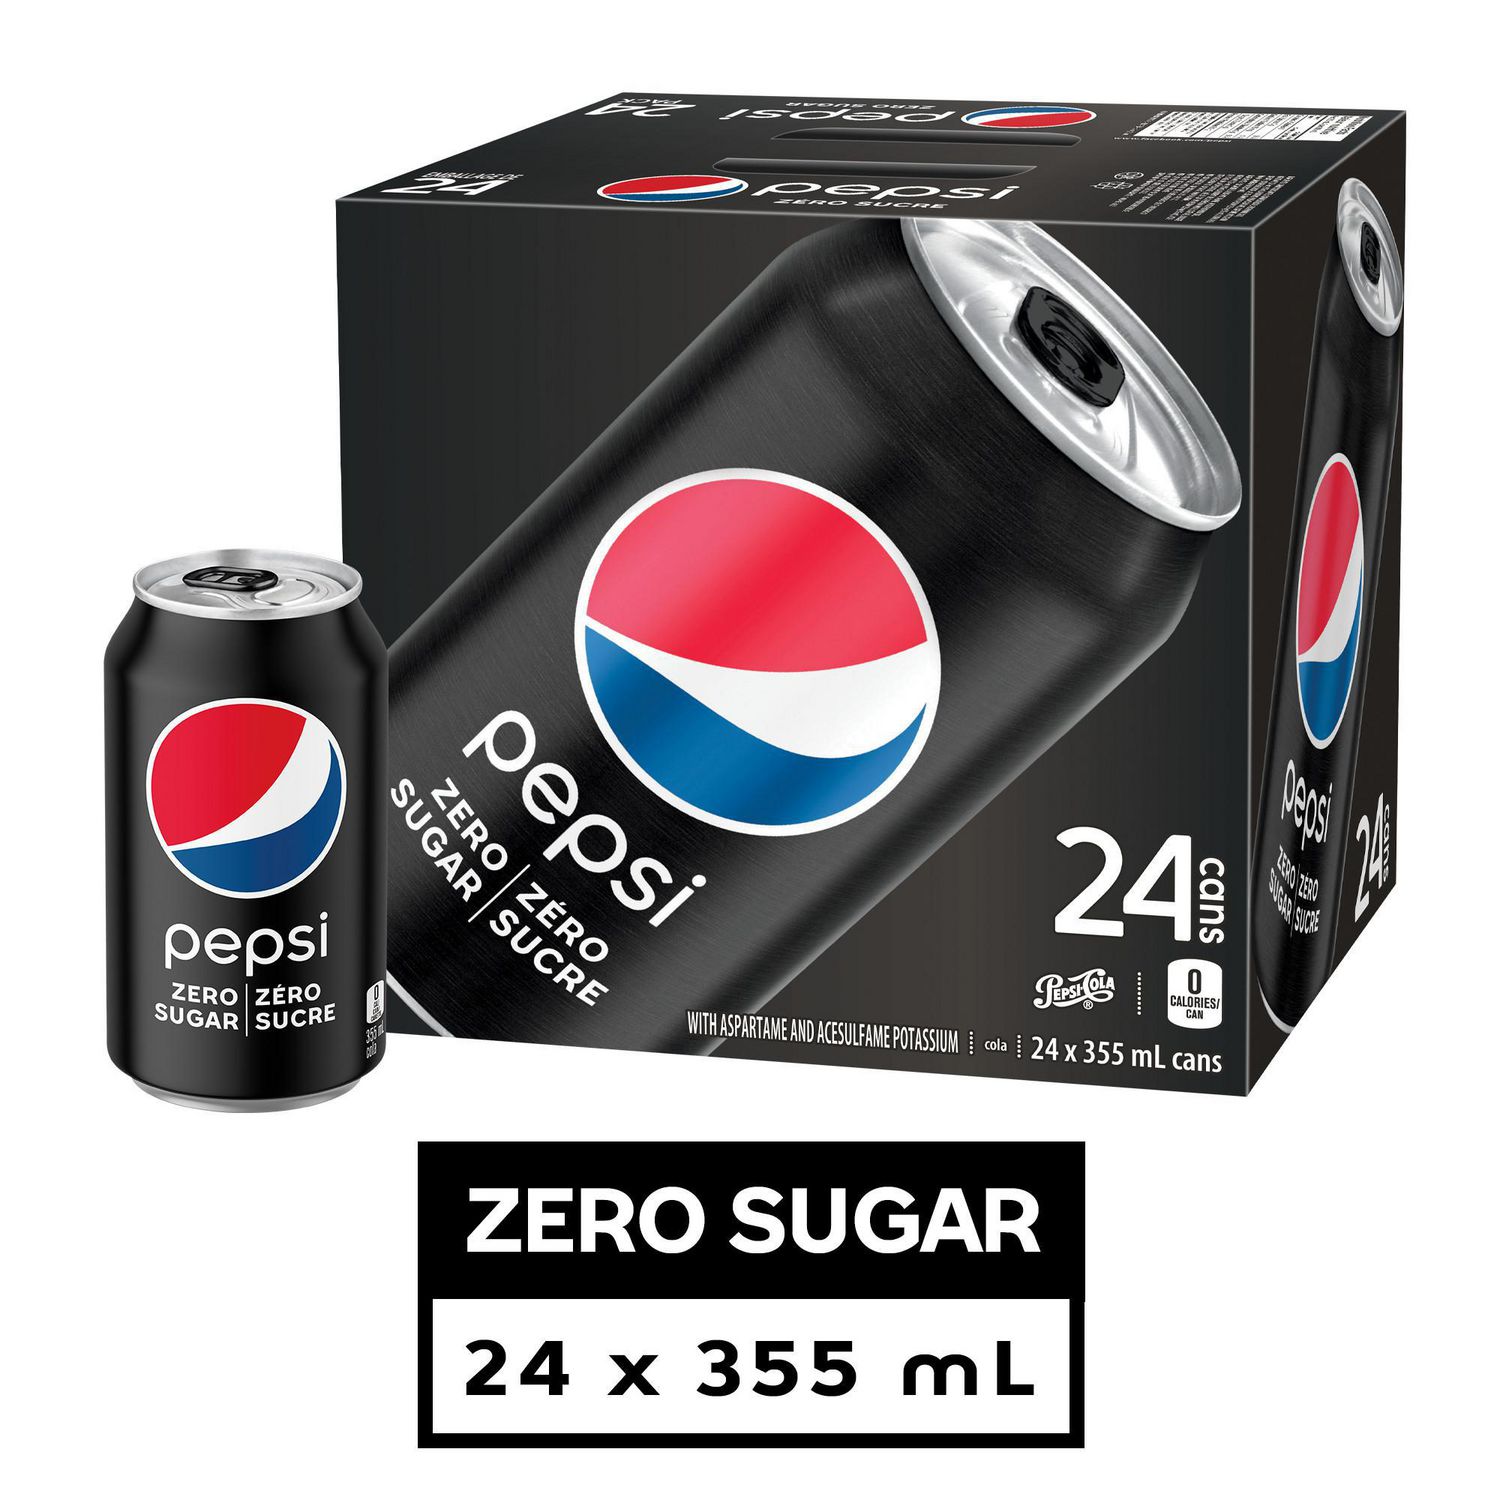 Pepsi Zero Sugar cola, 355 mL Cans, 24 Pack | Walmart Canada